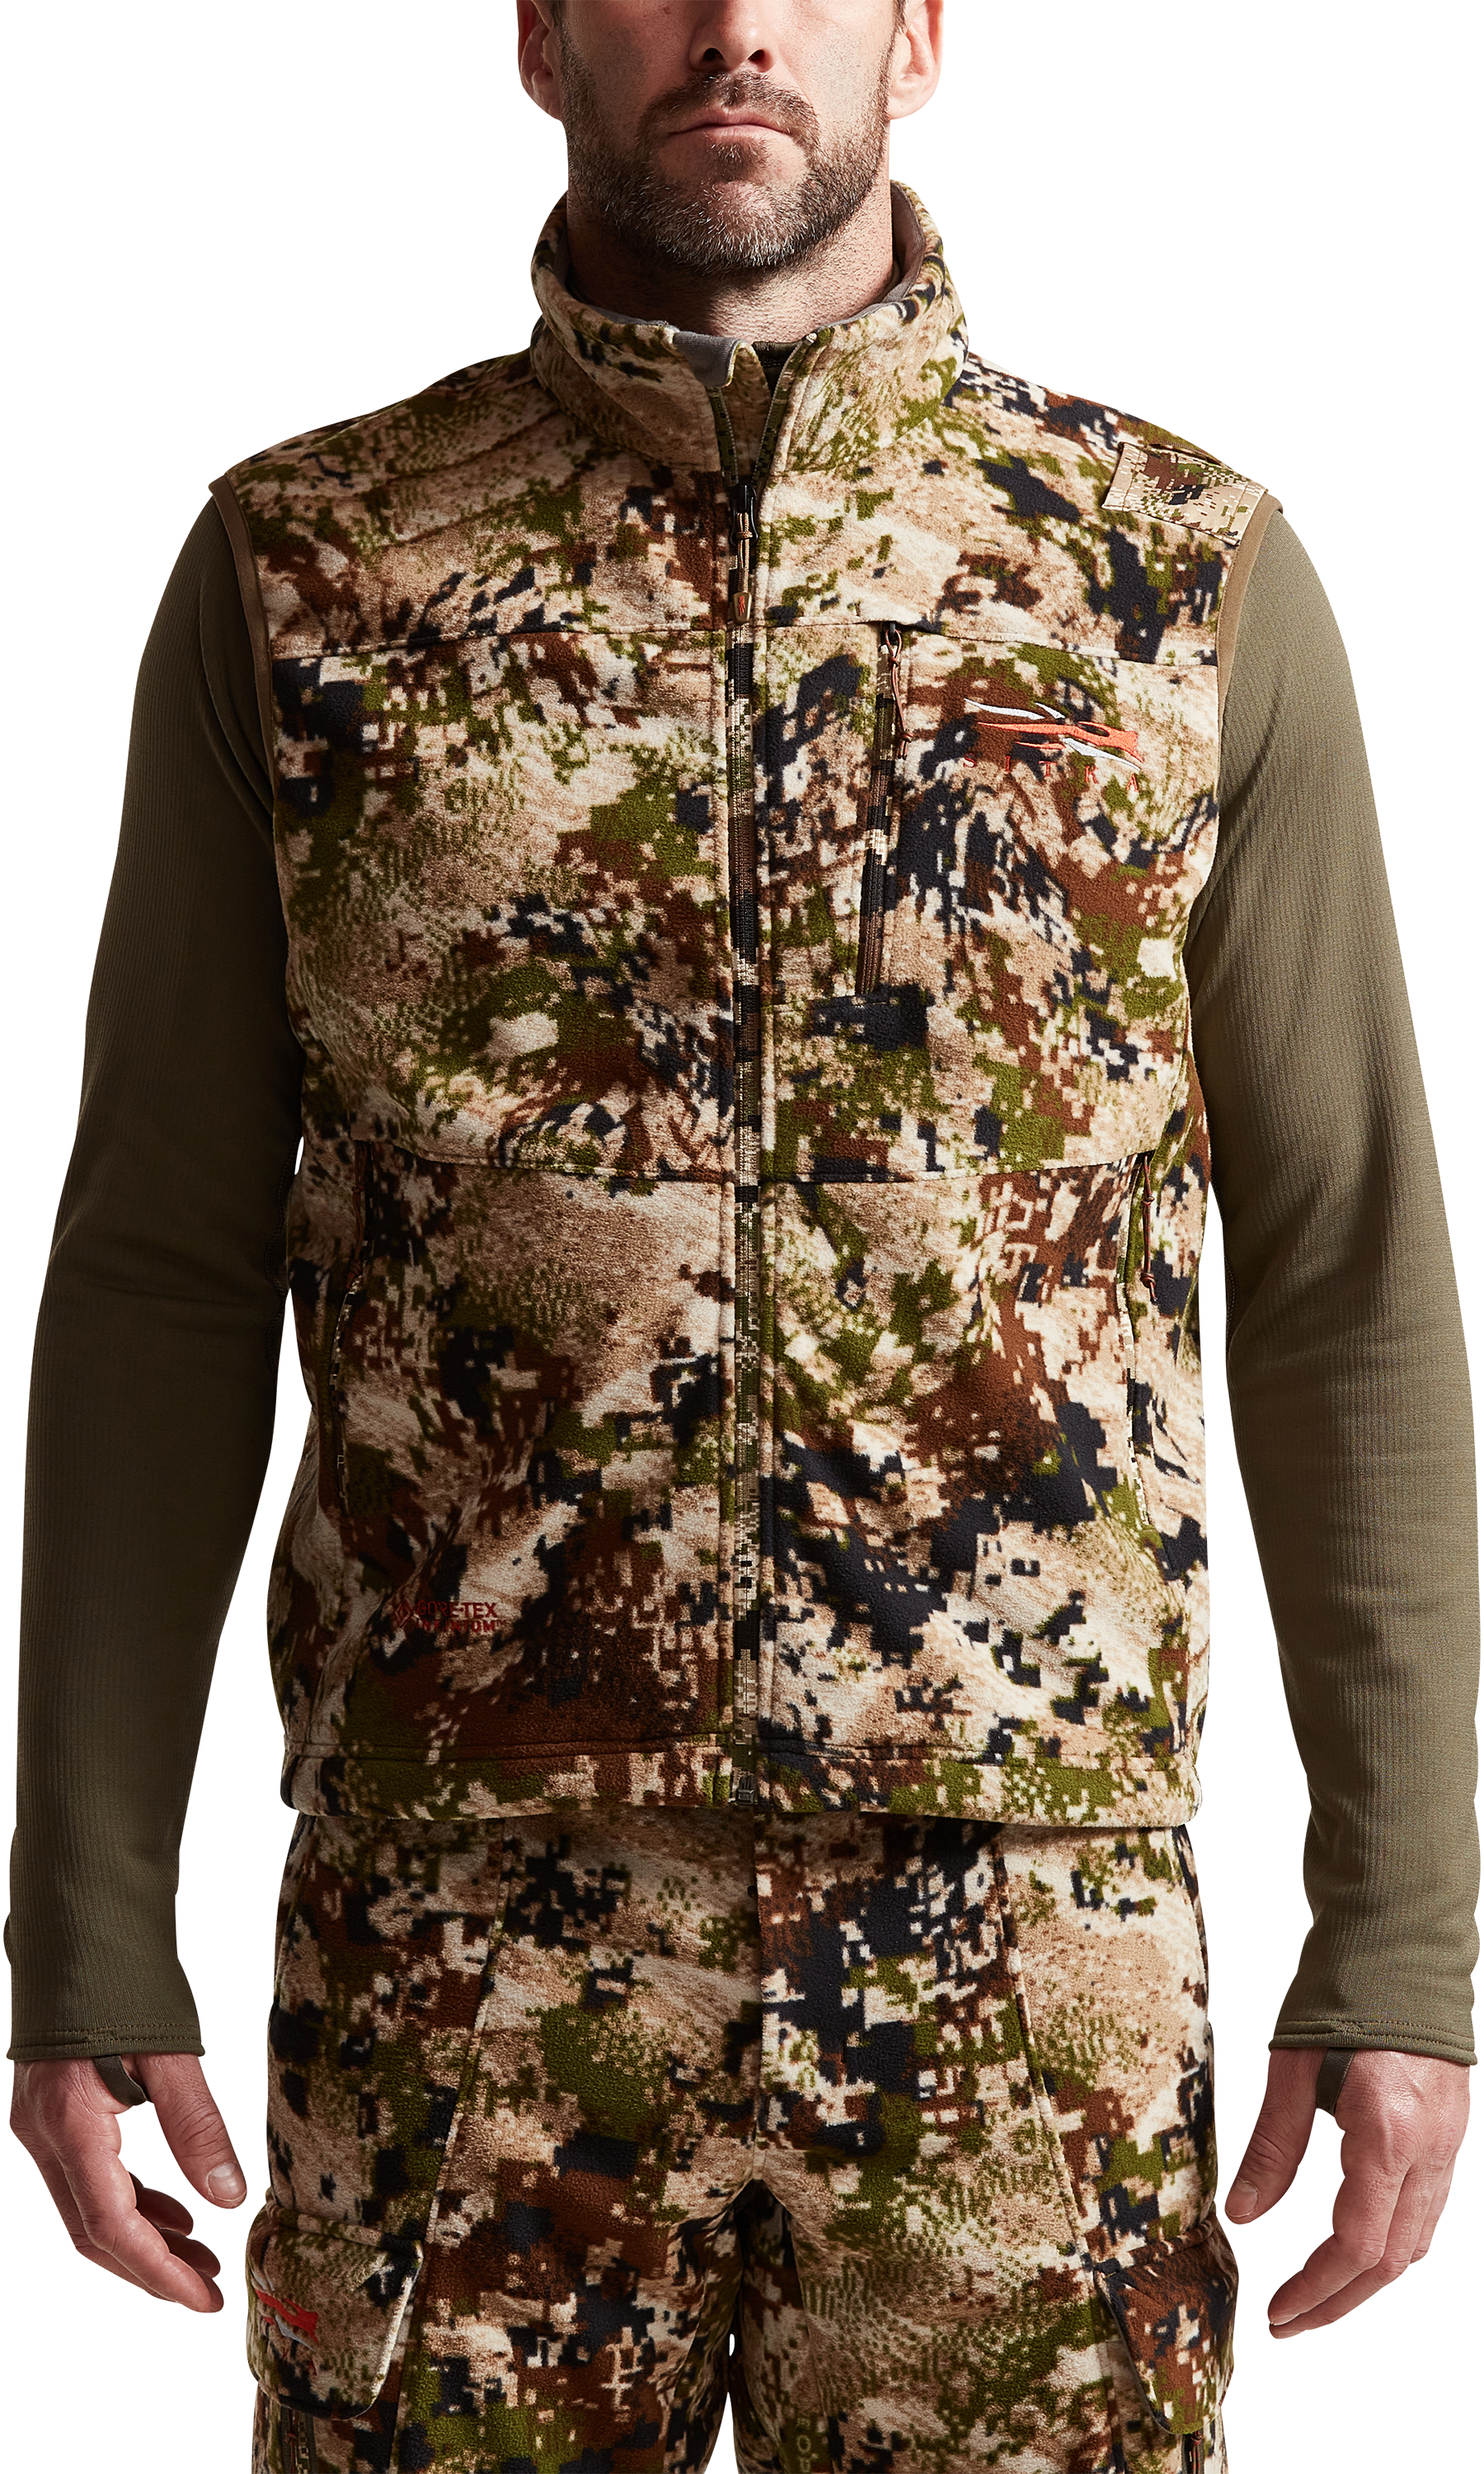 SITKA GORE OPTIFADE Concealment Subalpine Series Stratus Vest for Men